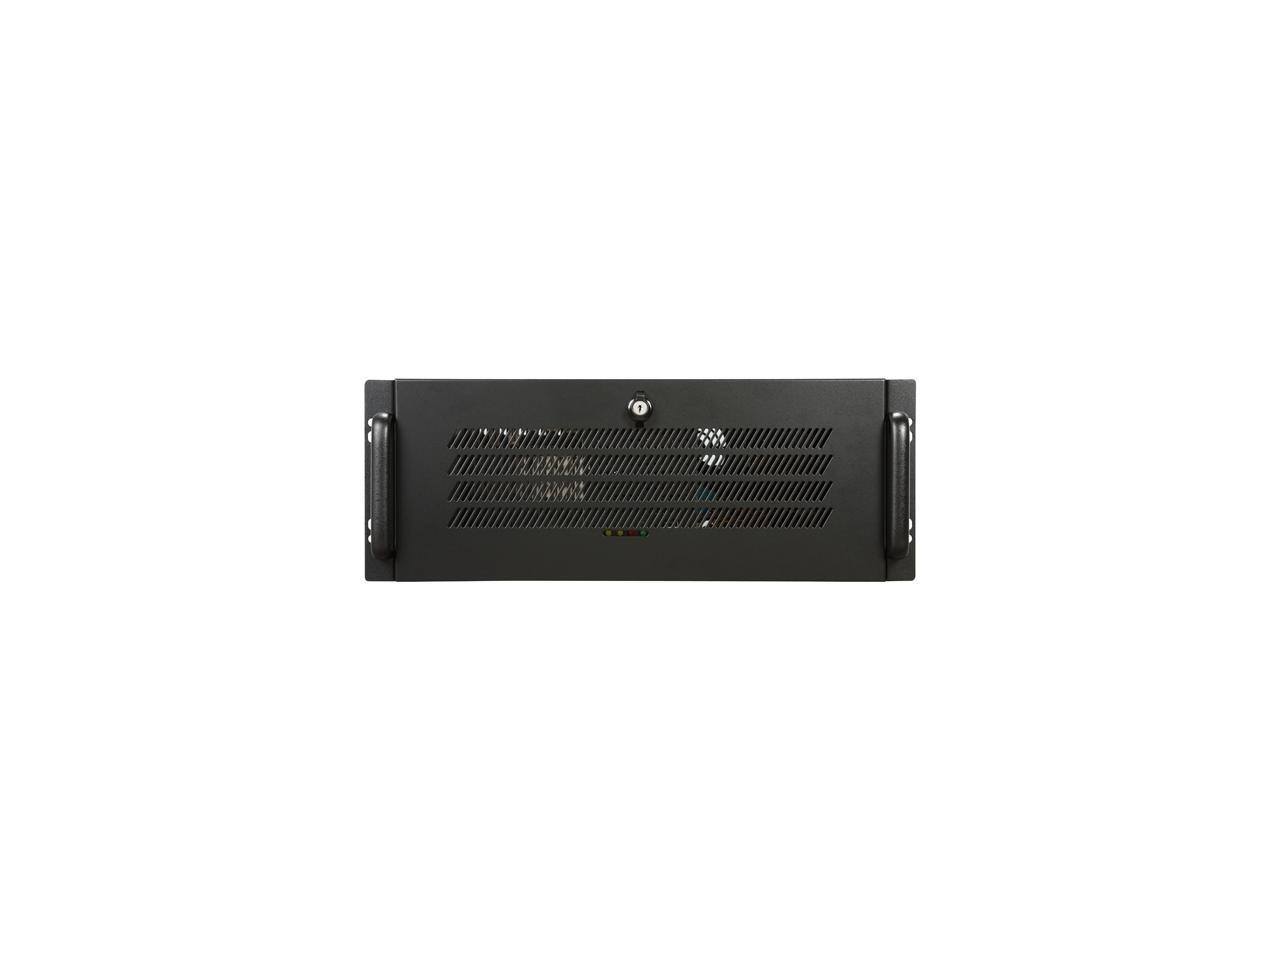 Topower Tp-4055-600W Black Steel 4U Rackmount Server Case W/ 600W Power Supply 8 External 5.25" Drive Bays